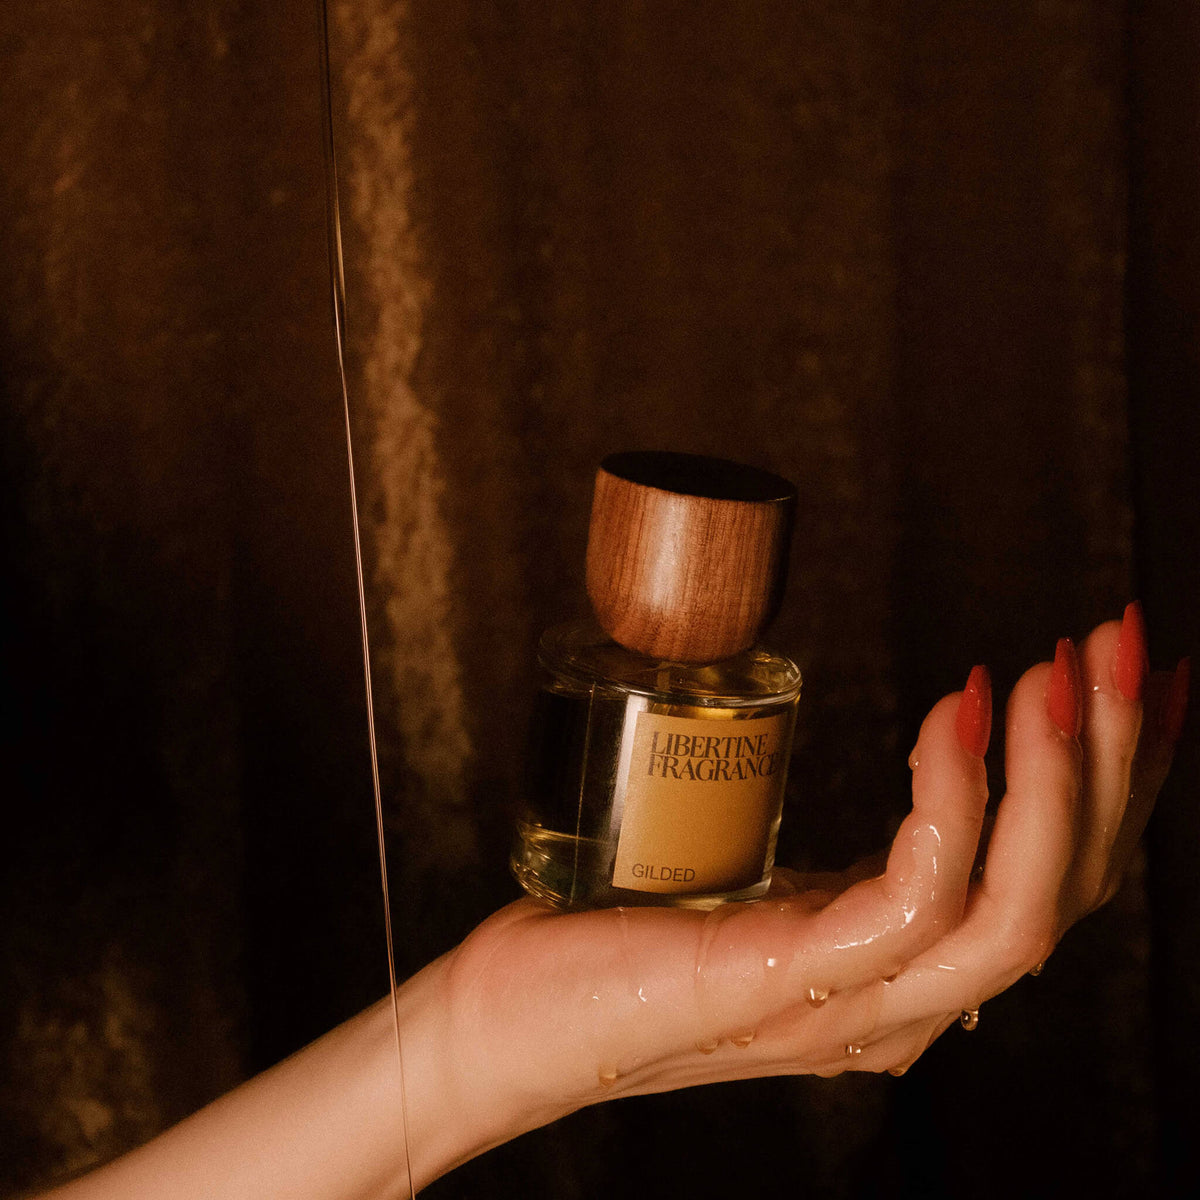 Libertine Fragrance, Gilded Eau de Parfum